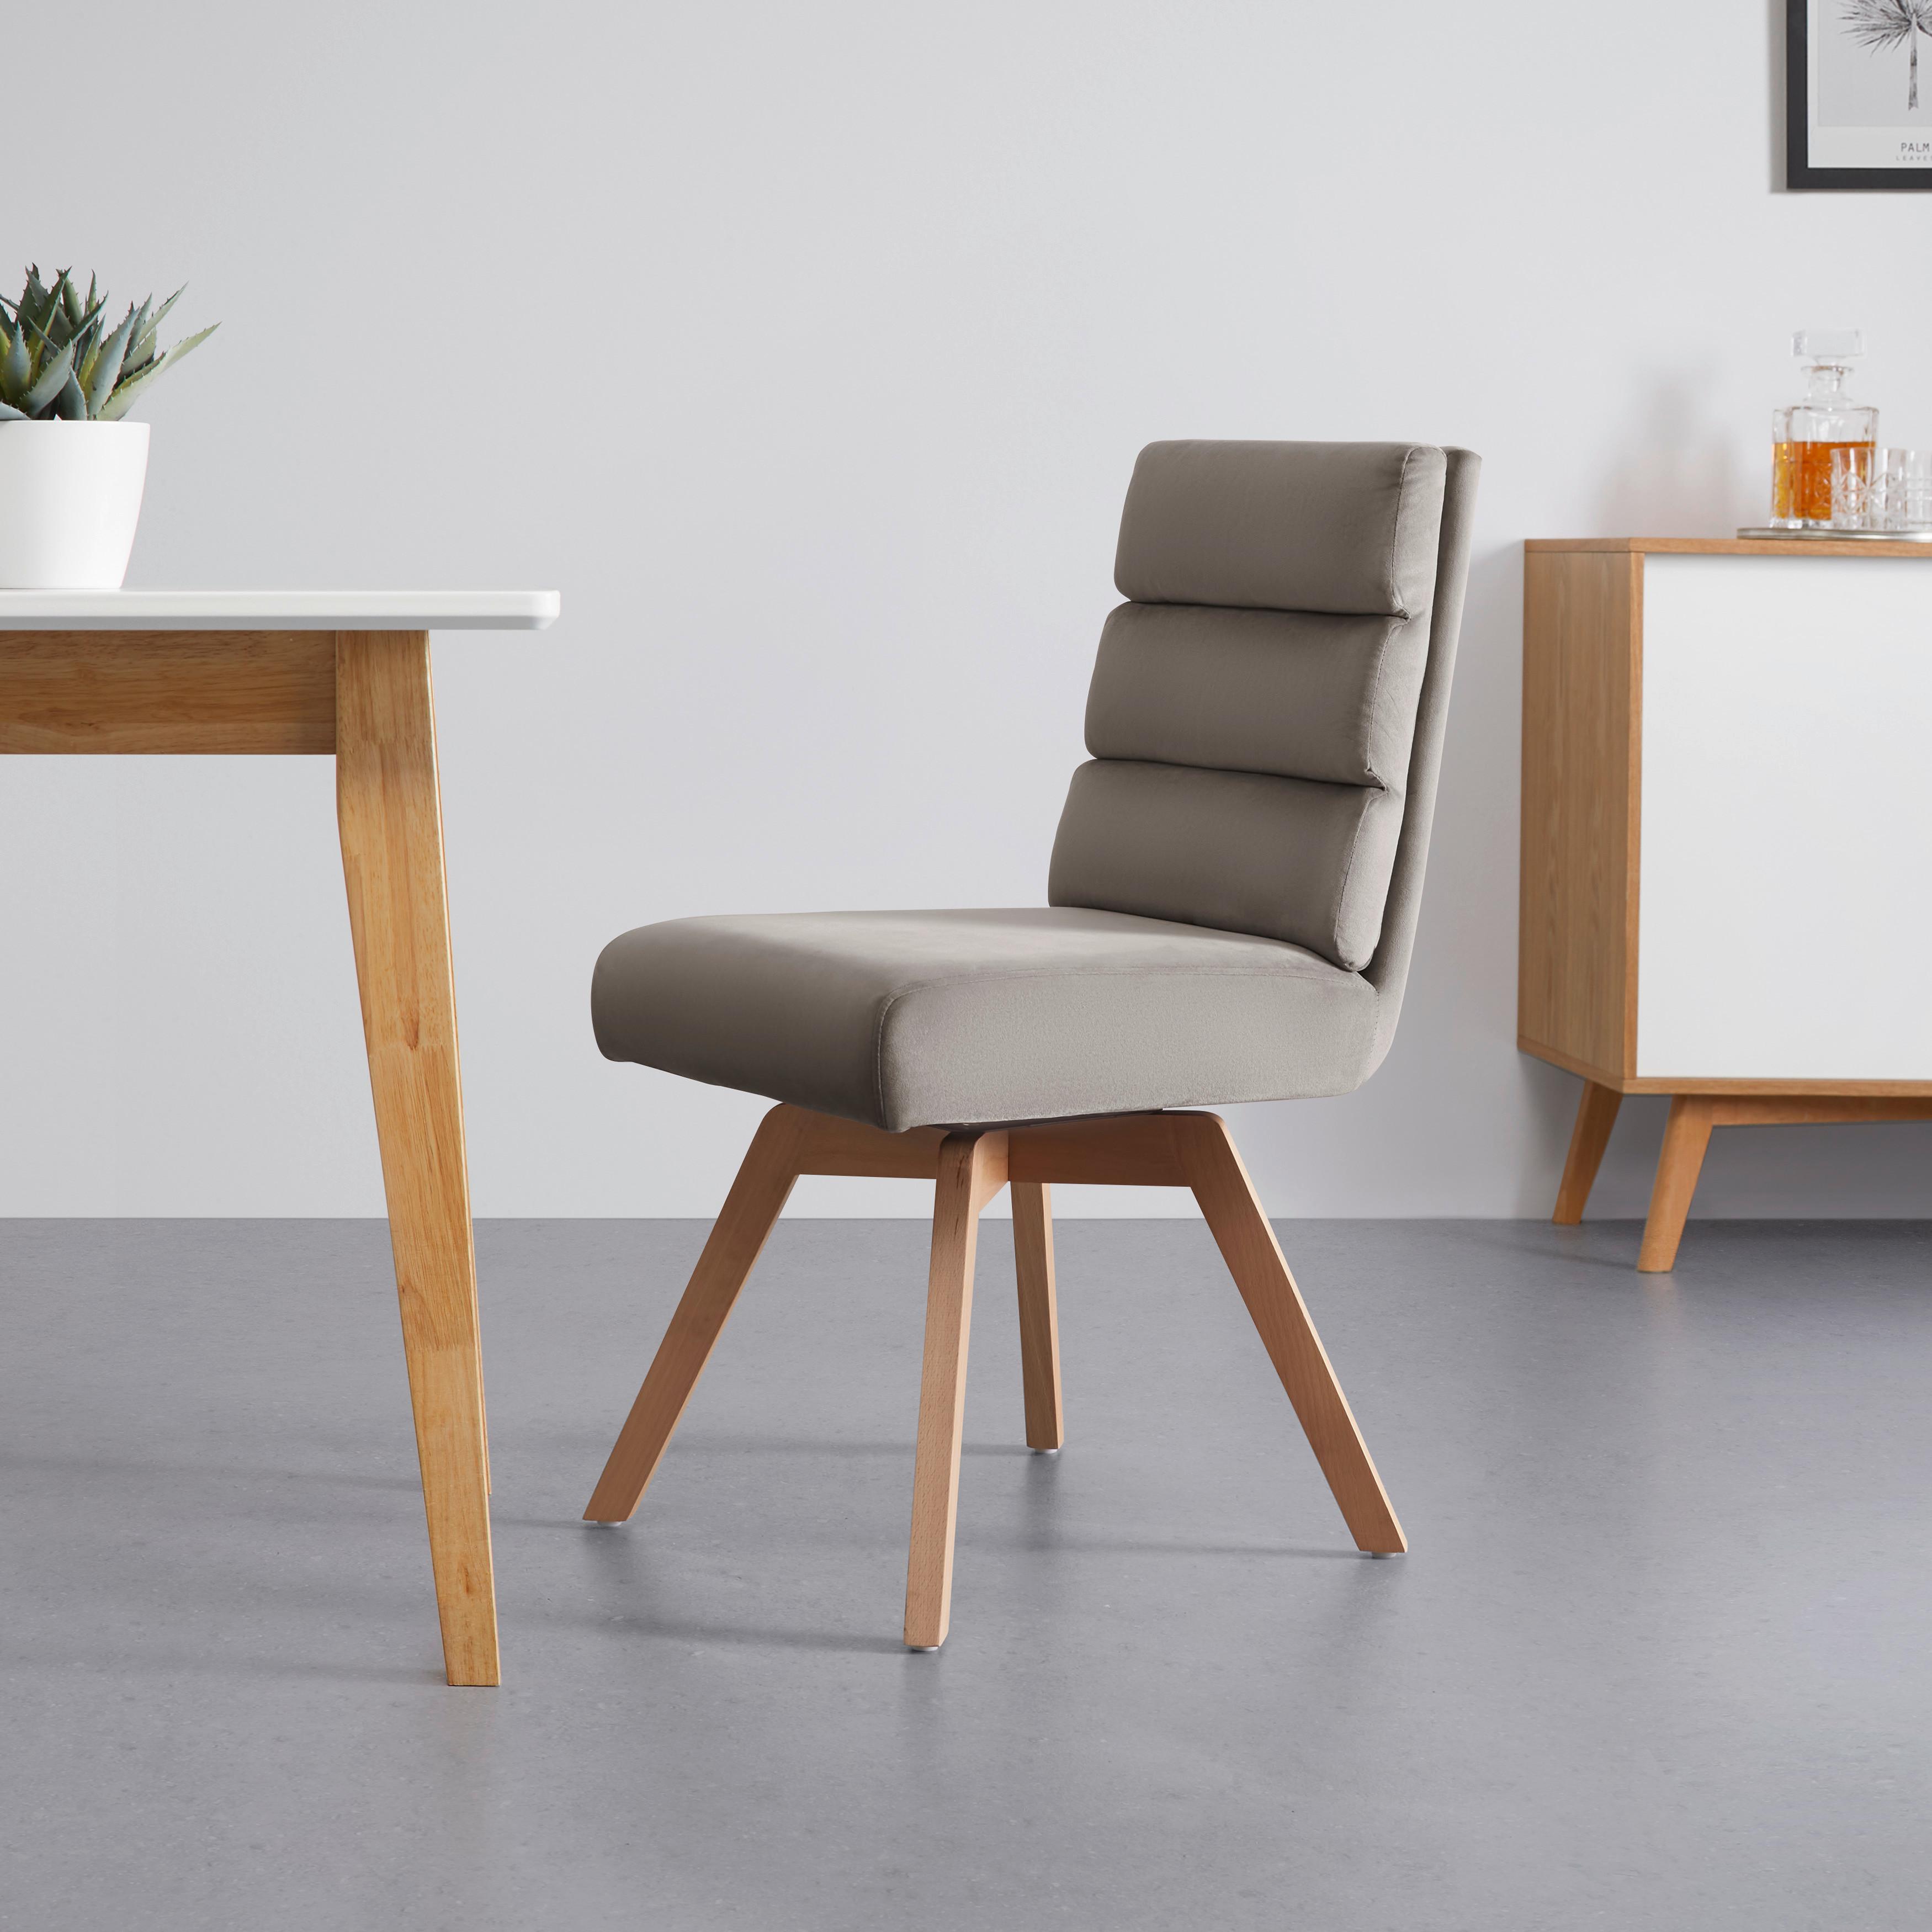 Stuhl "Katrin", taupe - Taupe/Naturfarben, MODERN, Holz/Textil (45/62/88cm) - Bessagi Home